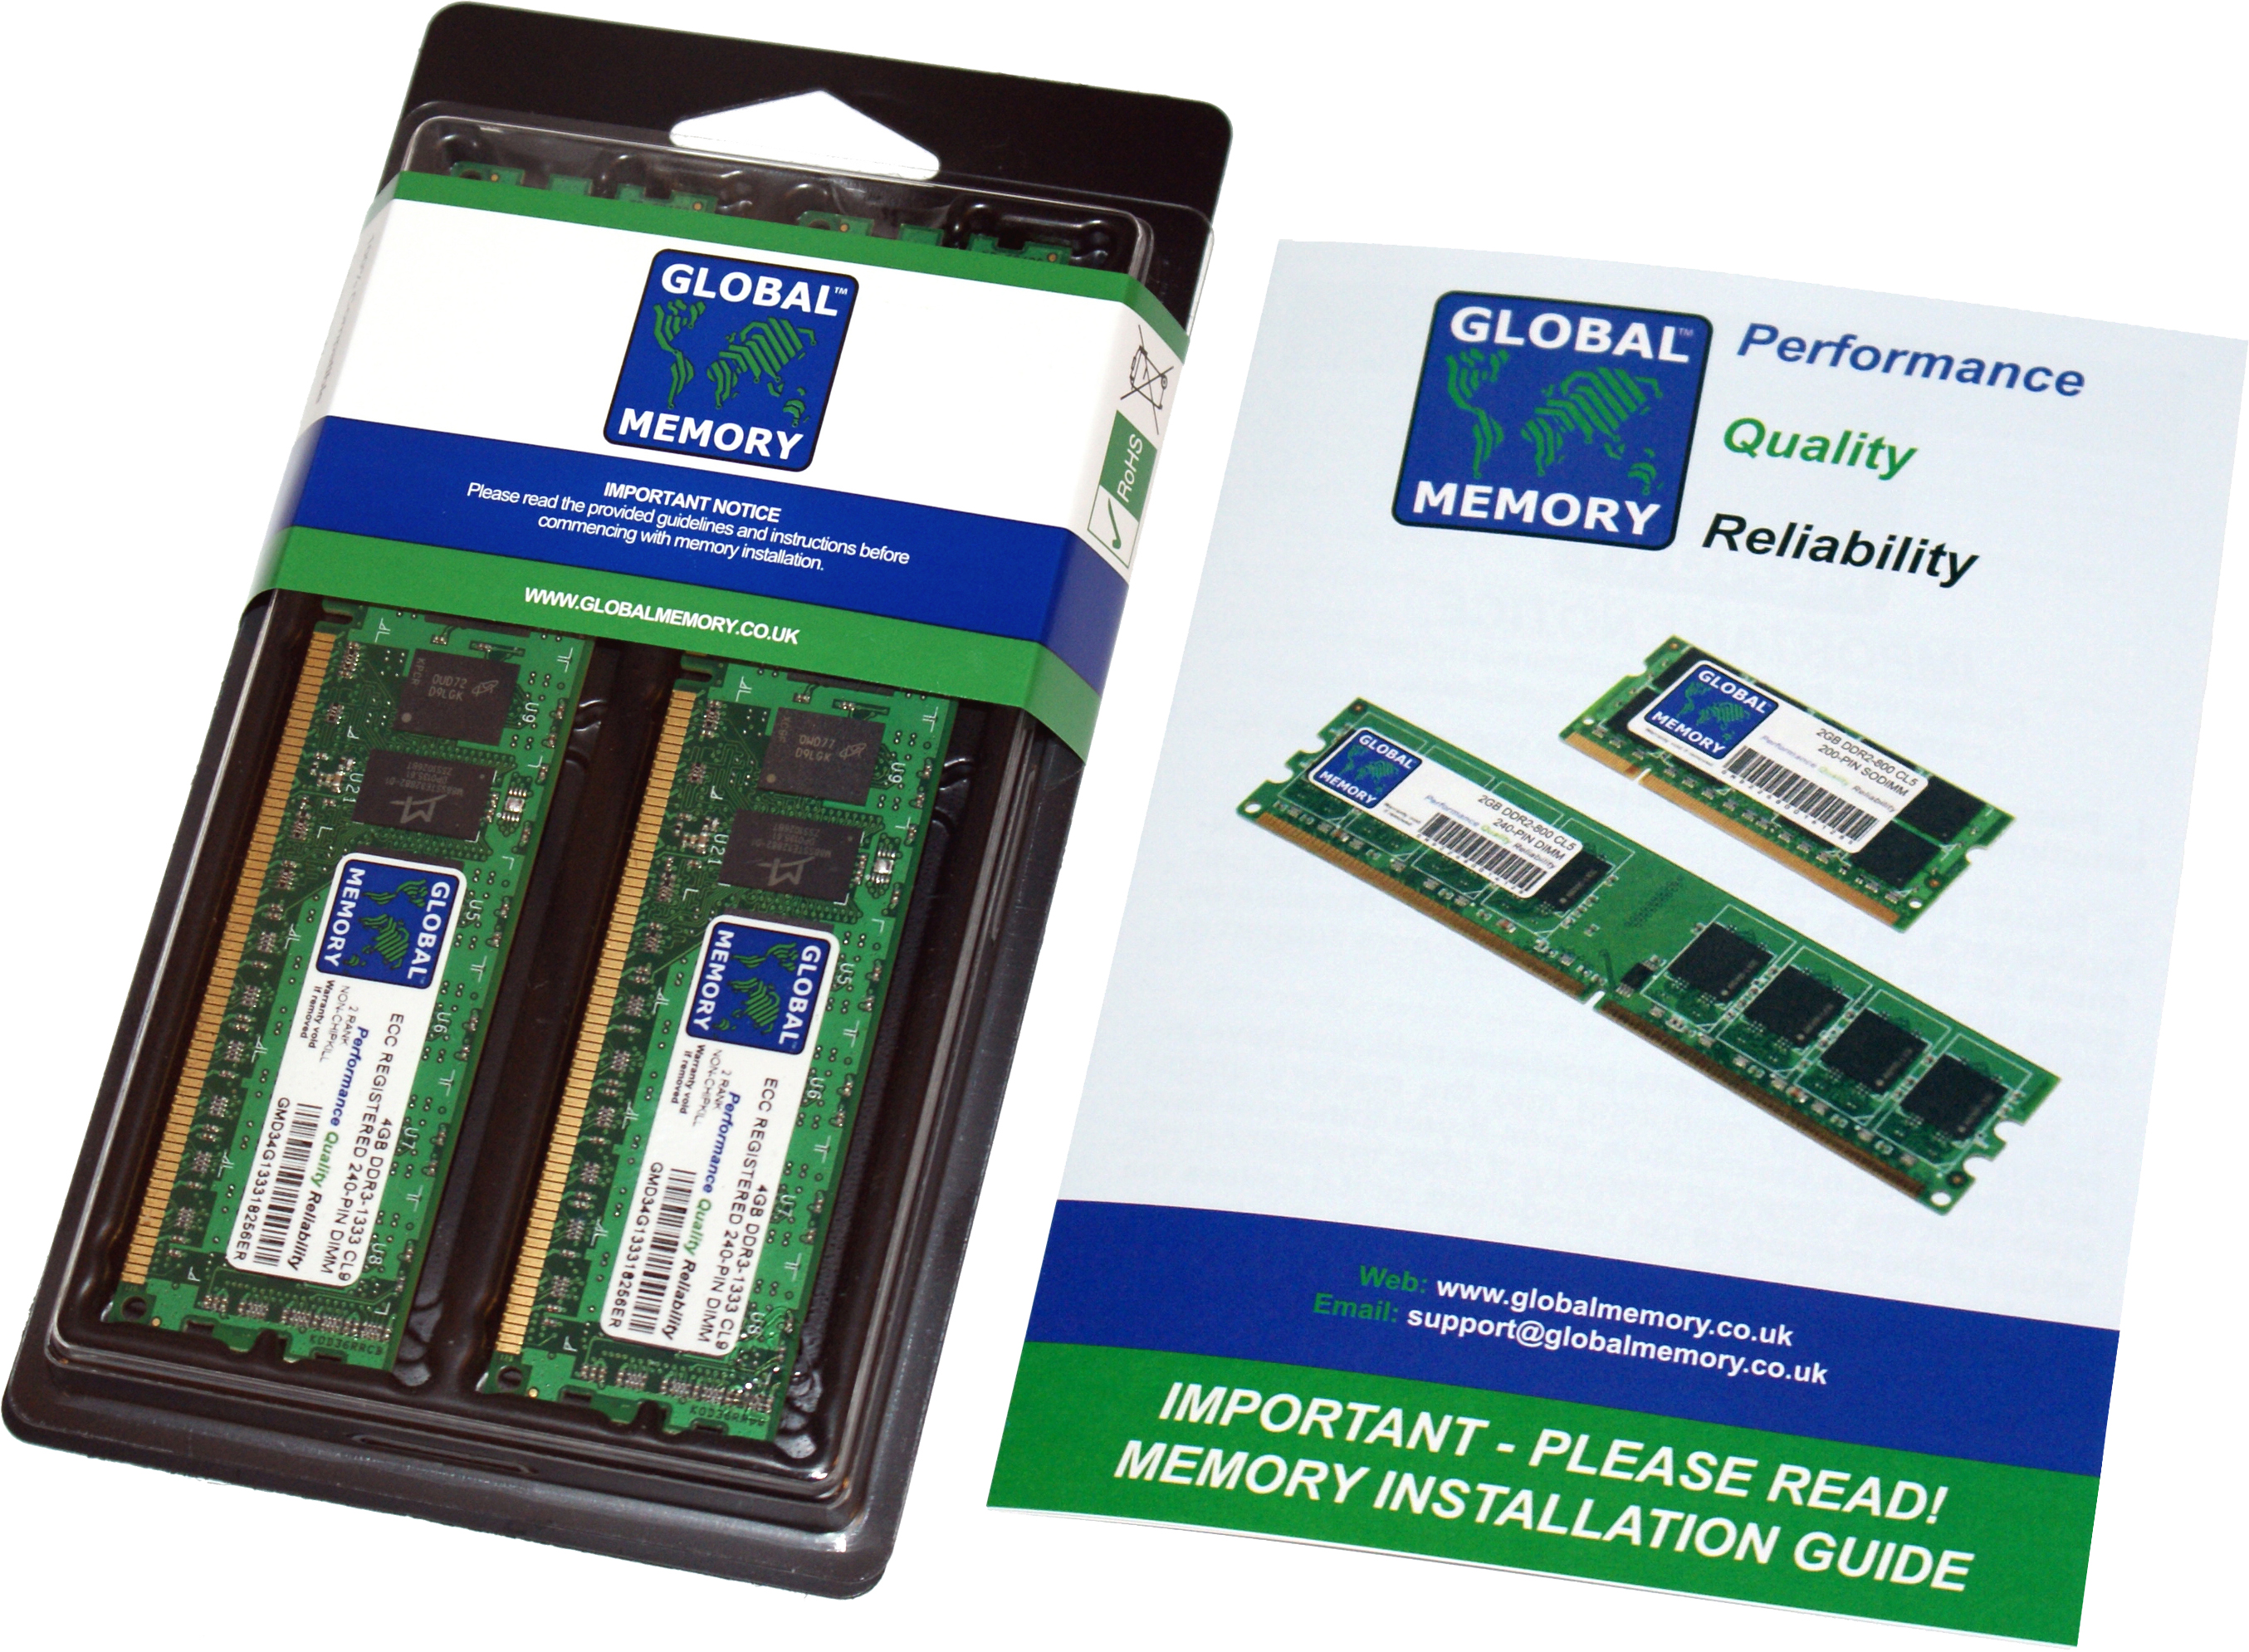 32GB (2 x 16GB) DDR4 2666MHz PC4-21300 288-PIN ECC REGISTERED DIMM (RDIMM) MEMORY RAM KIT FOR SERVERS/WORKSTATIONS/MOTHERBOARDS (4 RANK KIT CHIPKILL)